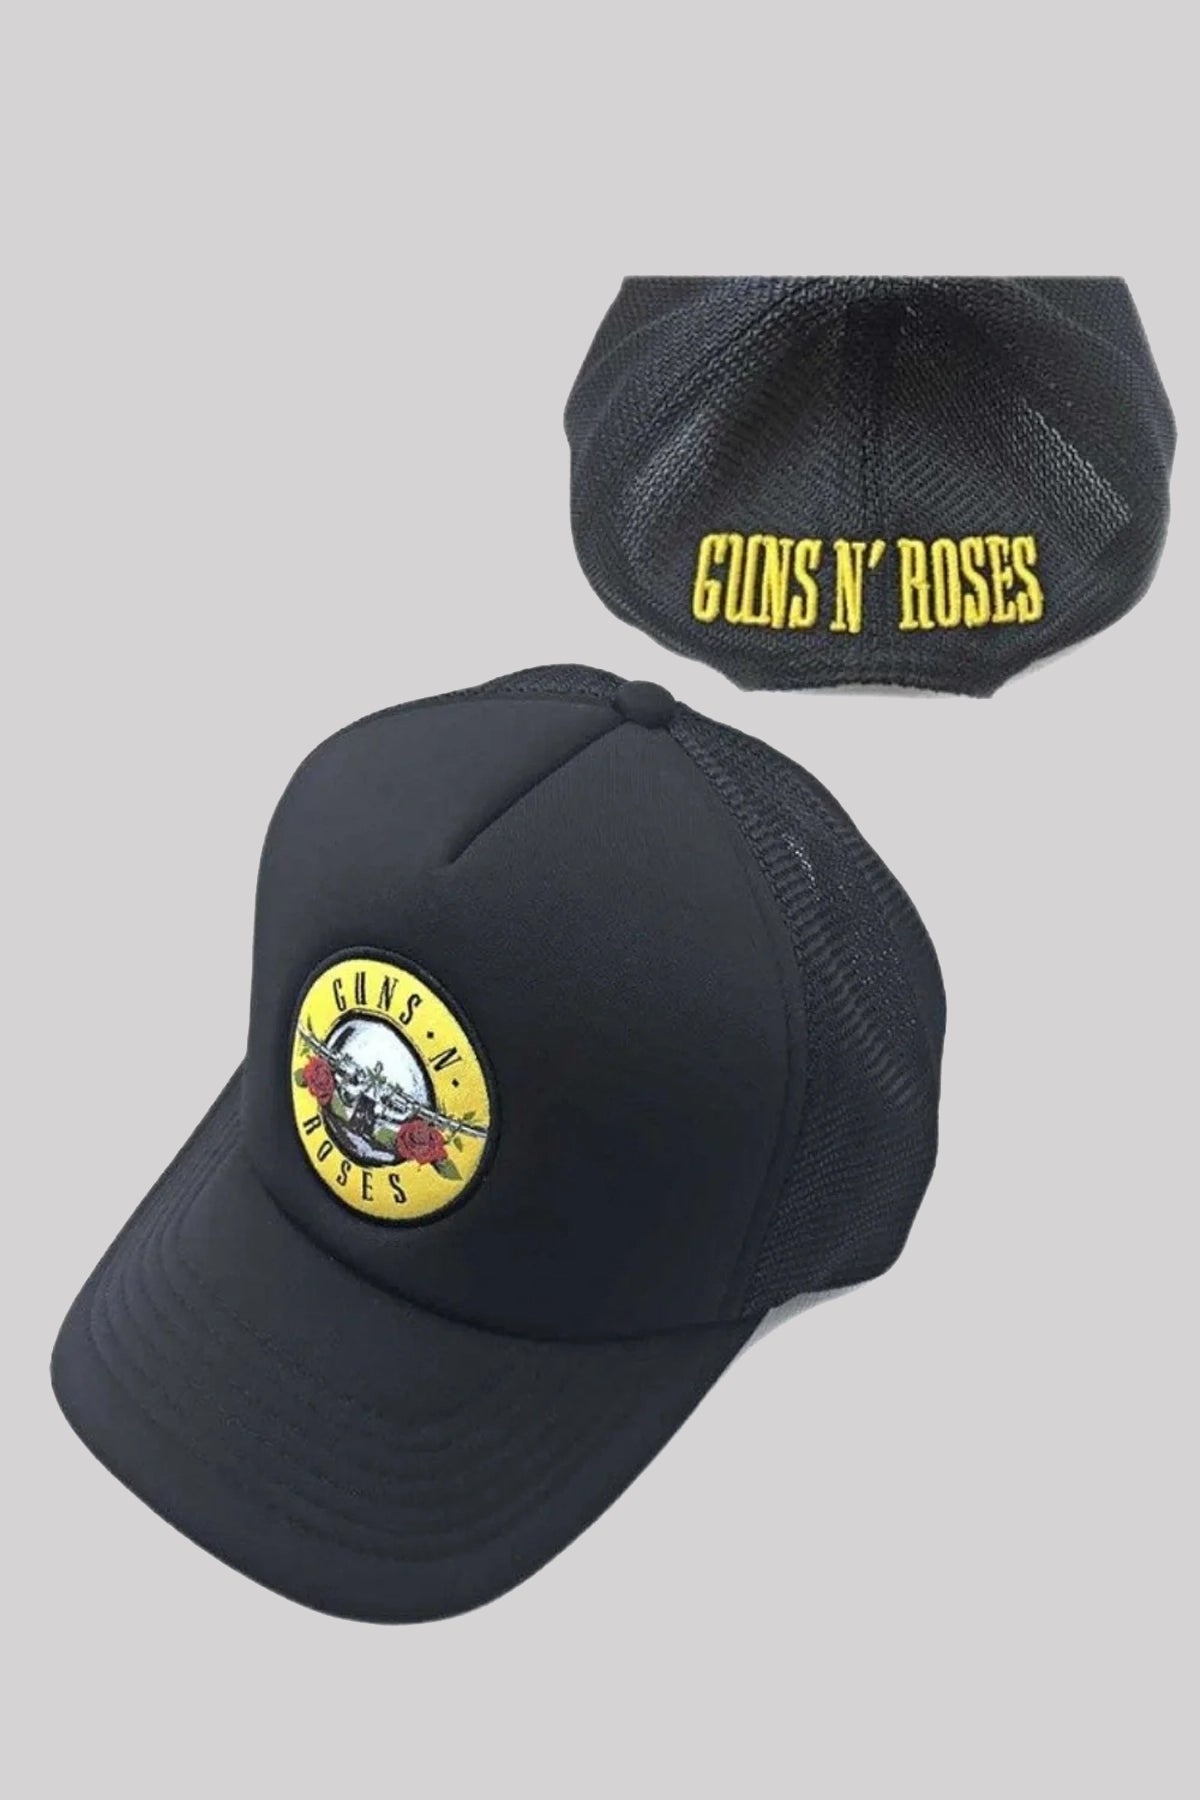 Guns N' Roses Unisex Mesh Back Cap: Circle Logo